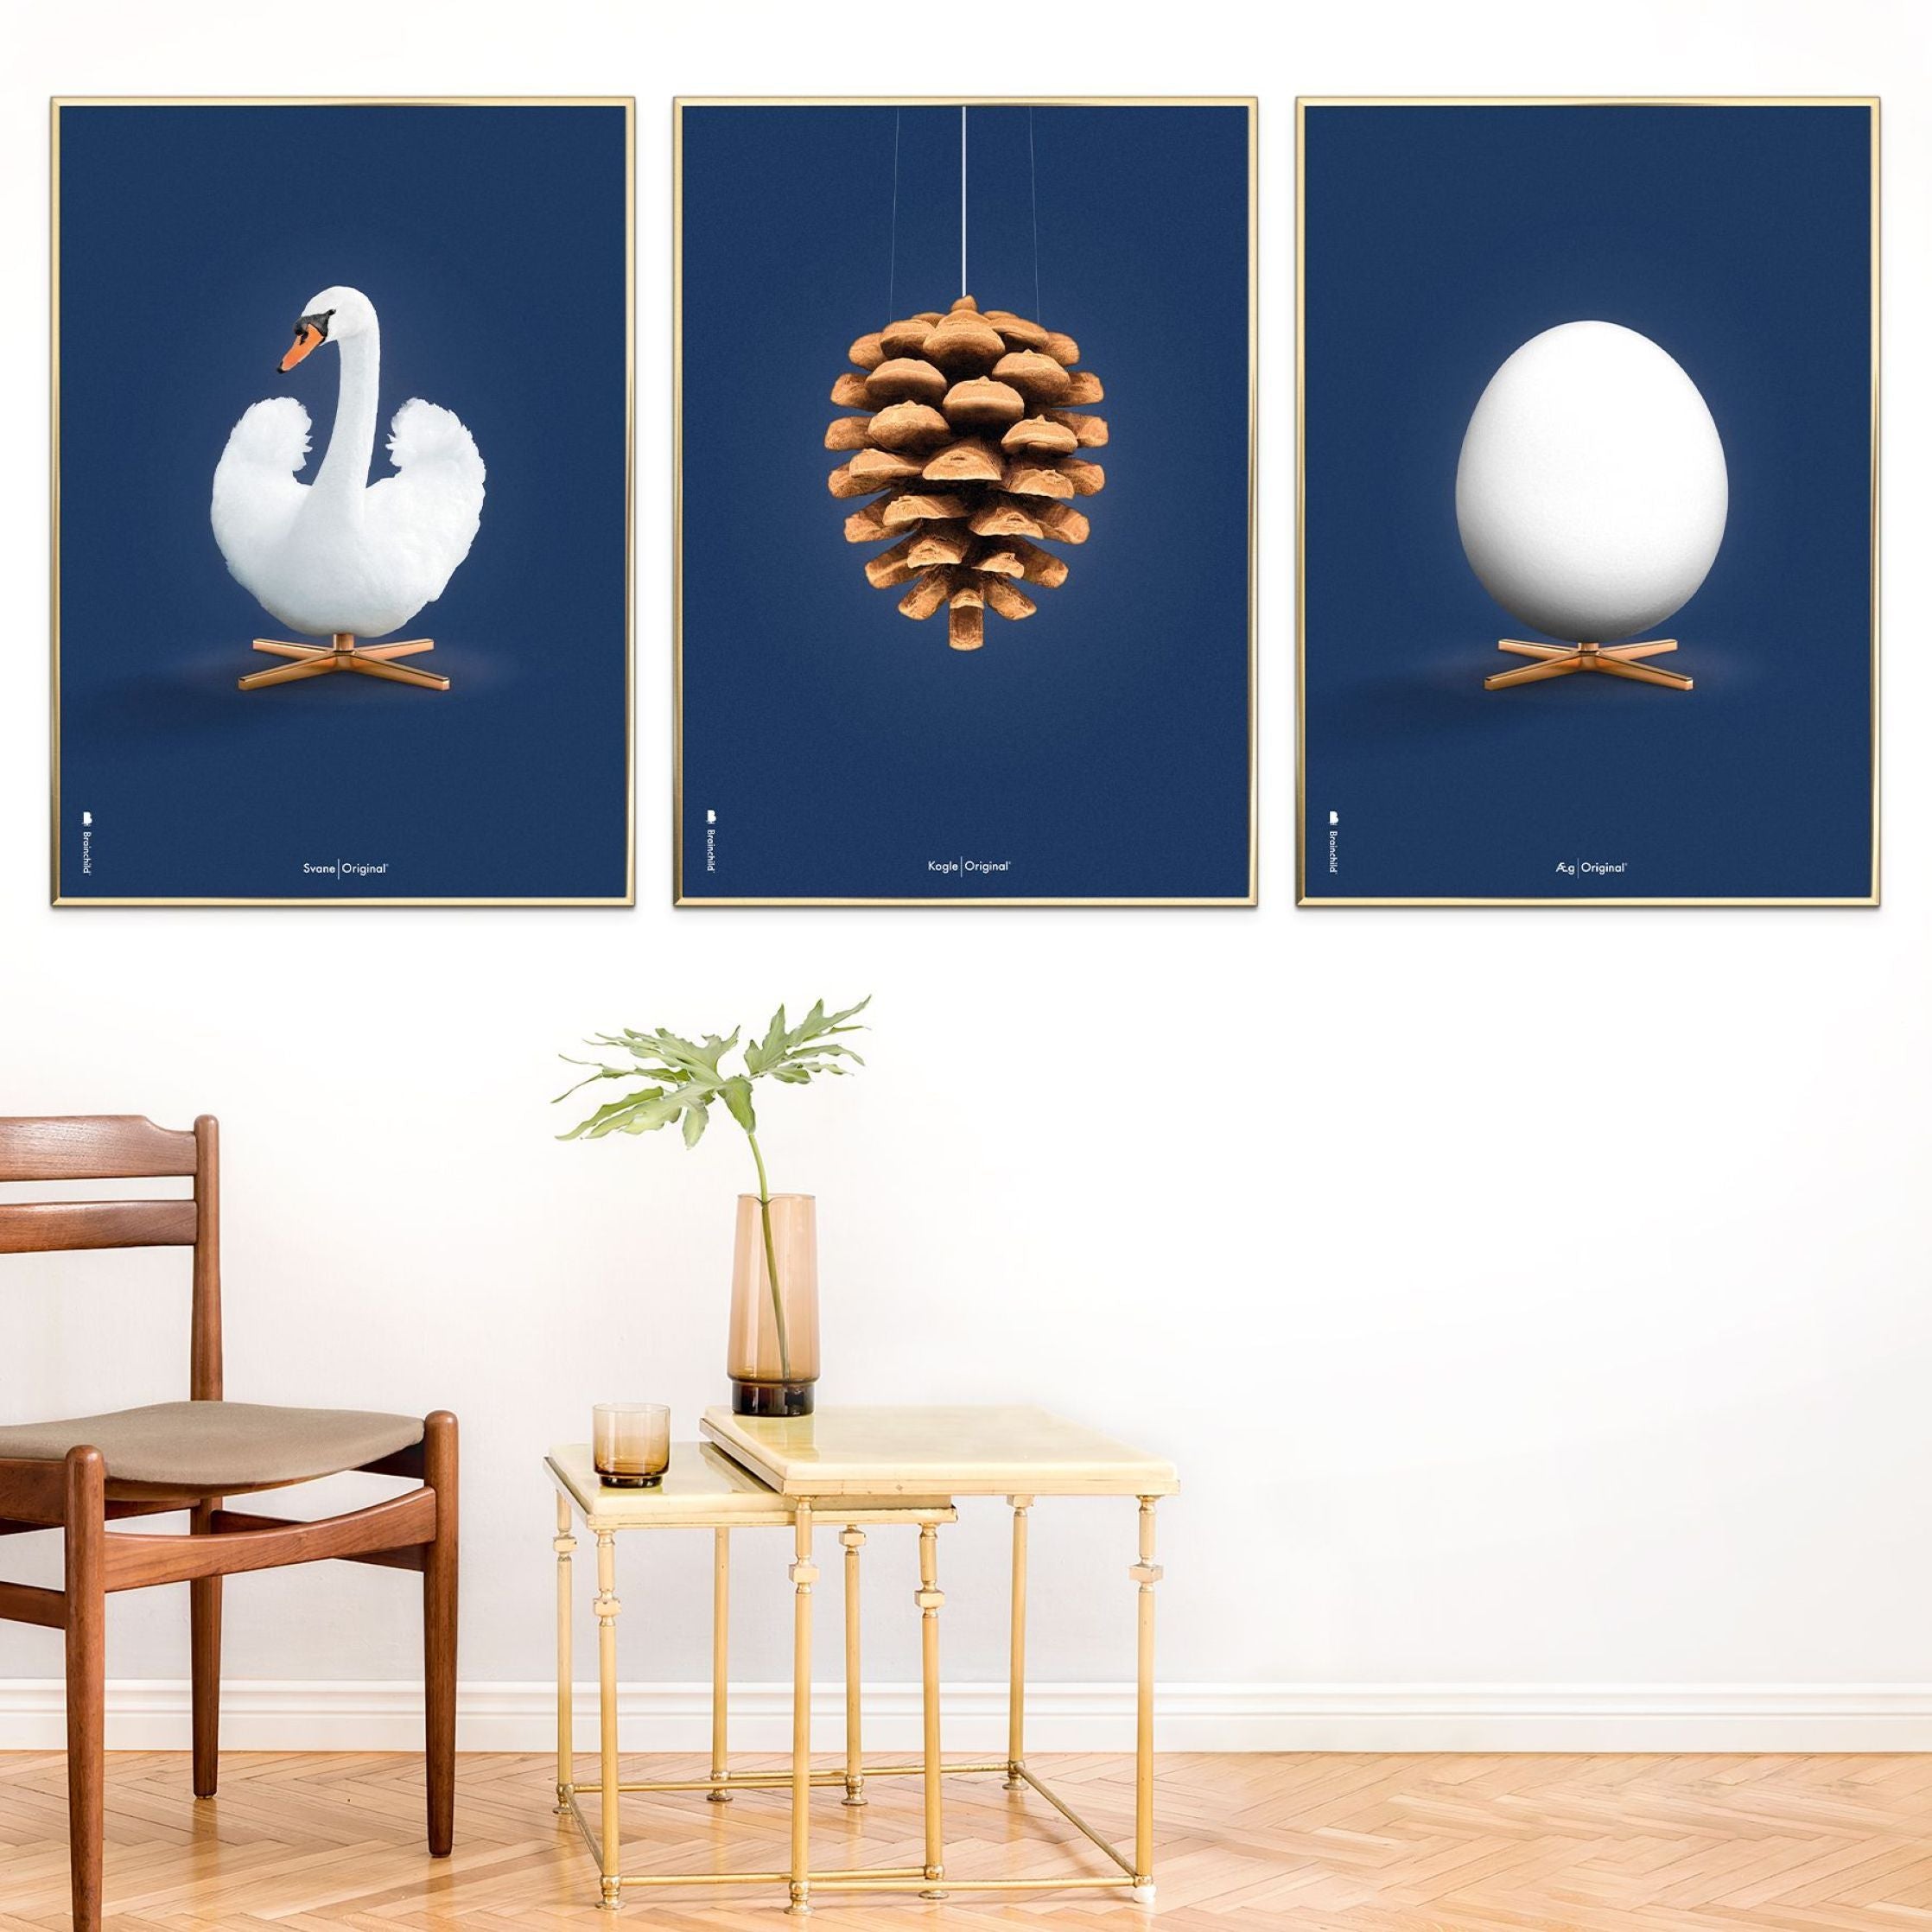 Brainchild Swan Classic Poster, Frame In Black Lacquered Wood 70 X100 Cm, Dark Blue Background